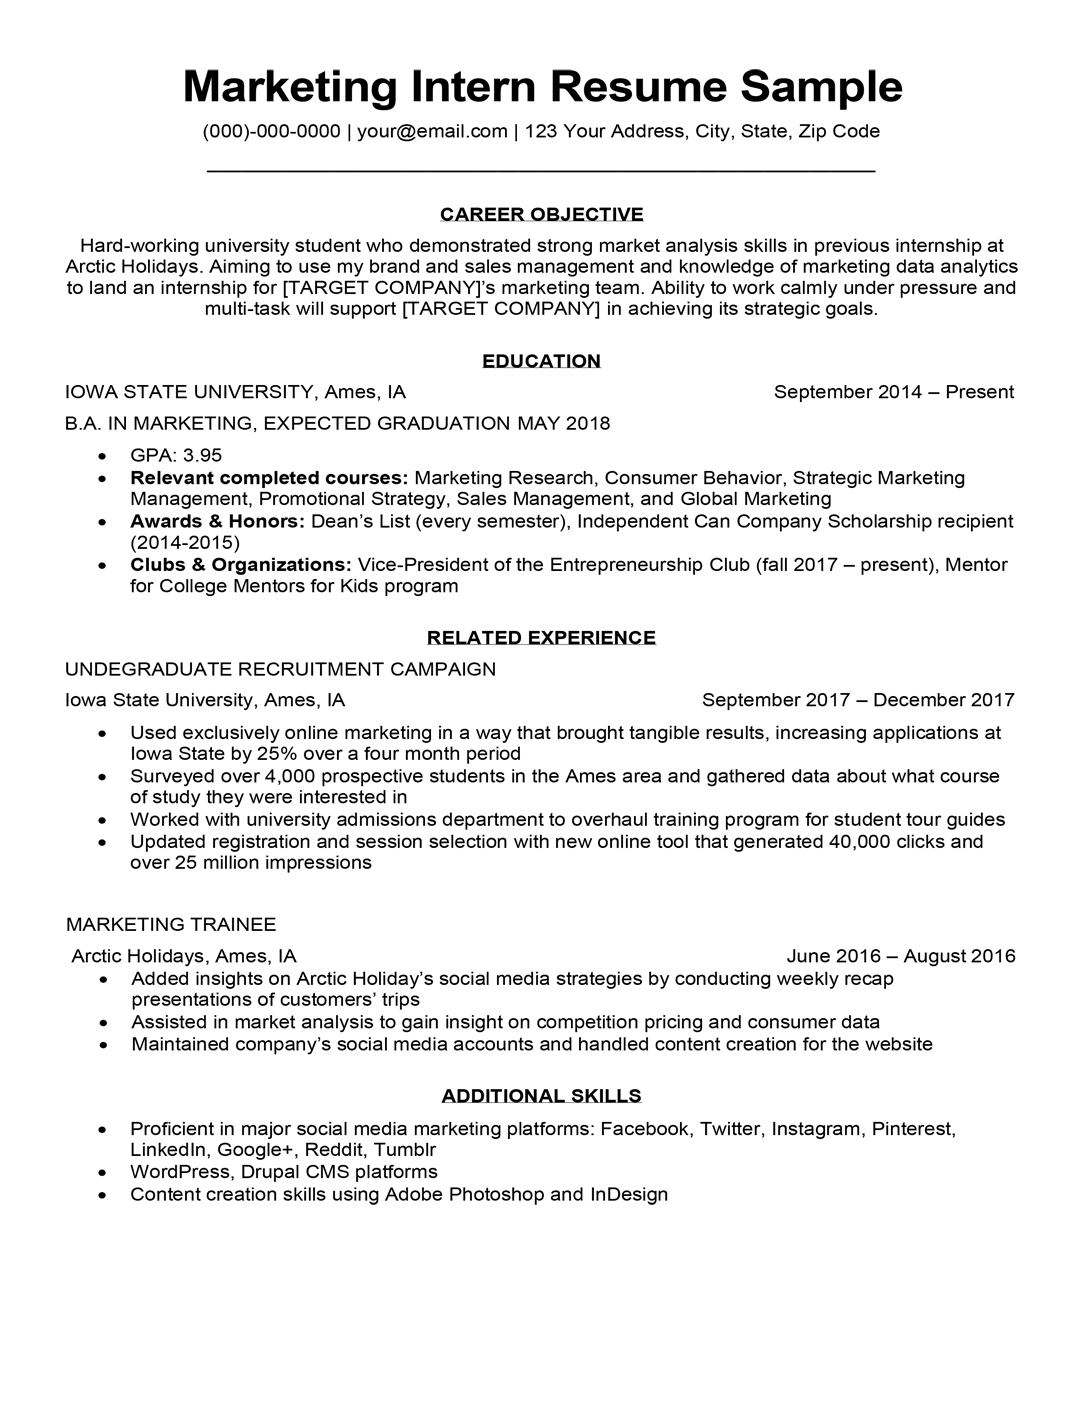 resume samples for college students for internship